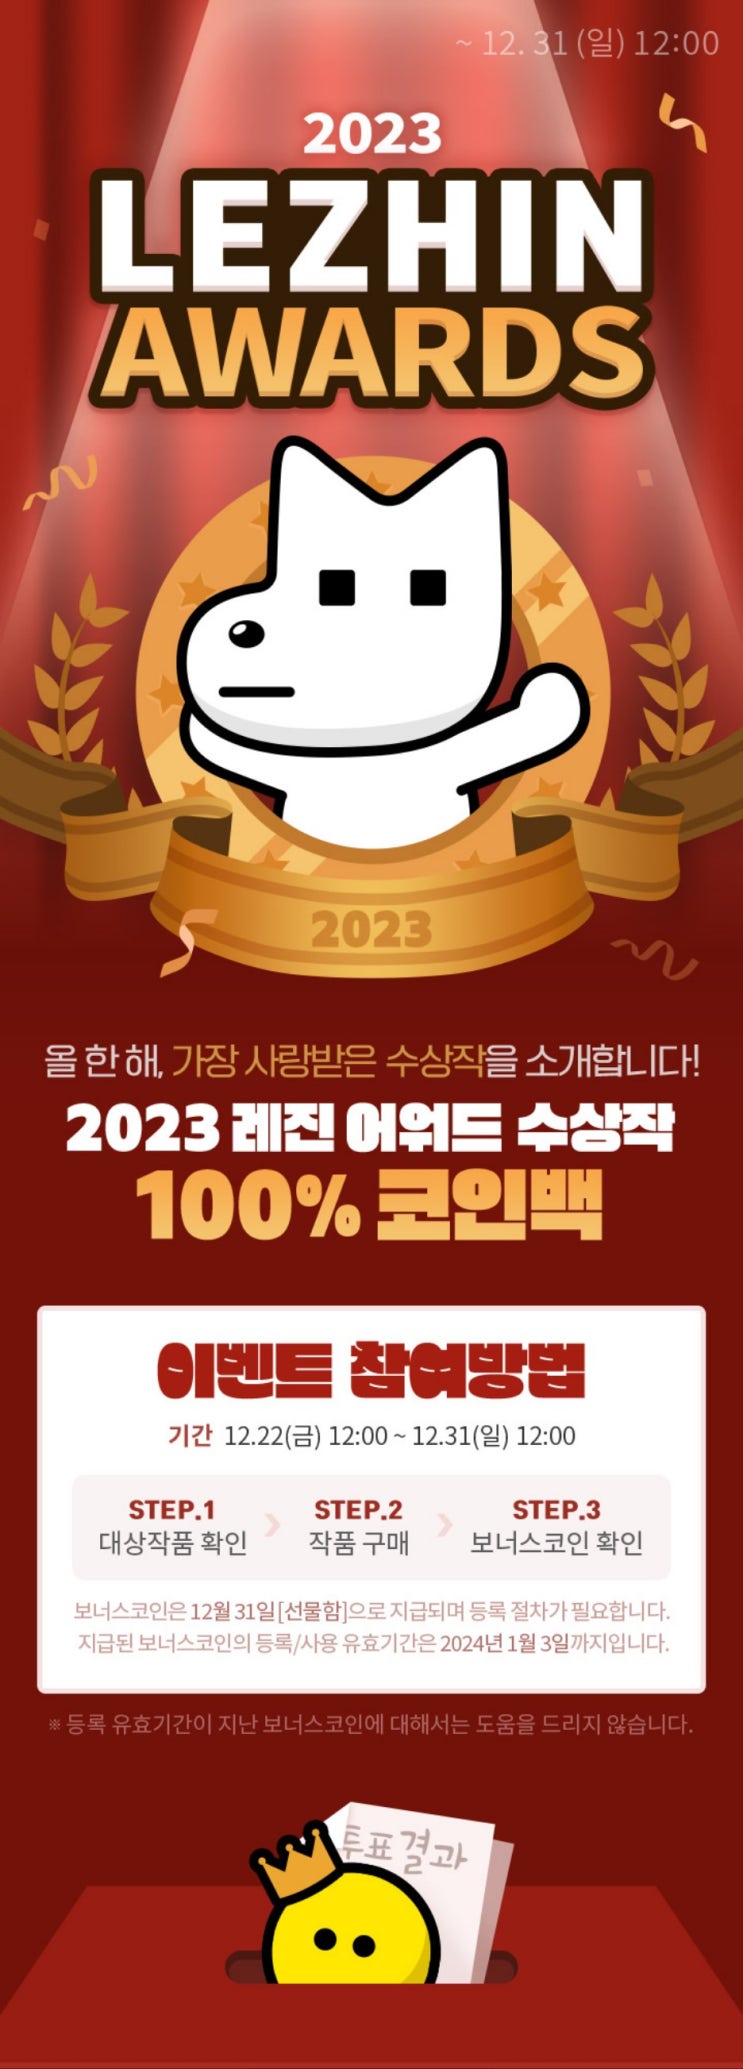 BL웹툰 이벤트) 레진-2023 Lezhin Awards 100% 코인백 (~12/31)